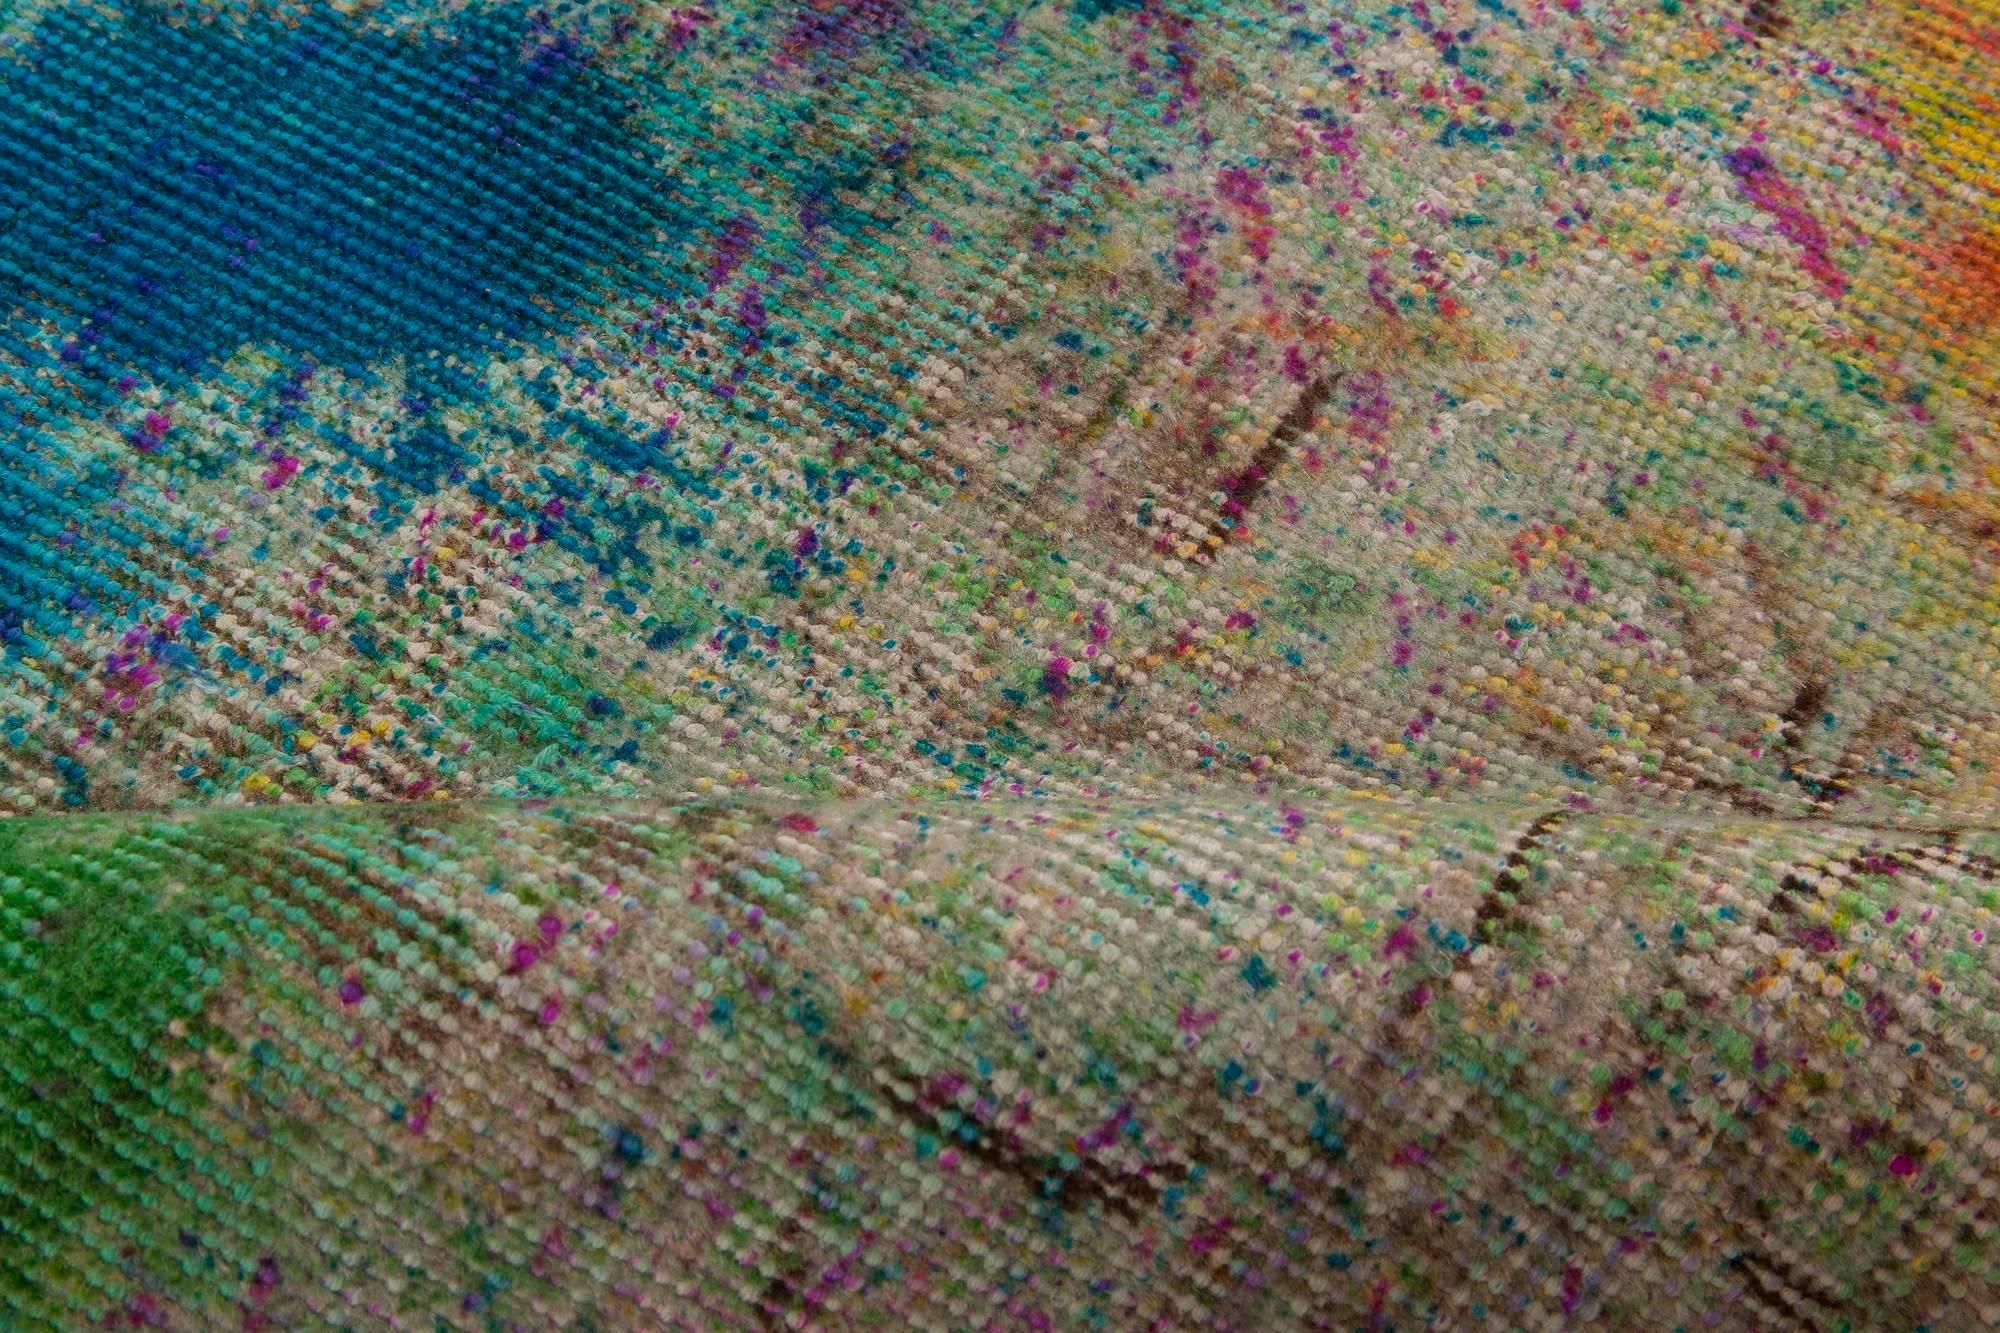 Contemporary Abstract Daliesque Handmade wool rug by Doris Leslie Blau
Size: 4'9